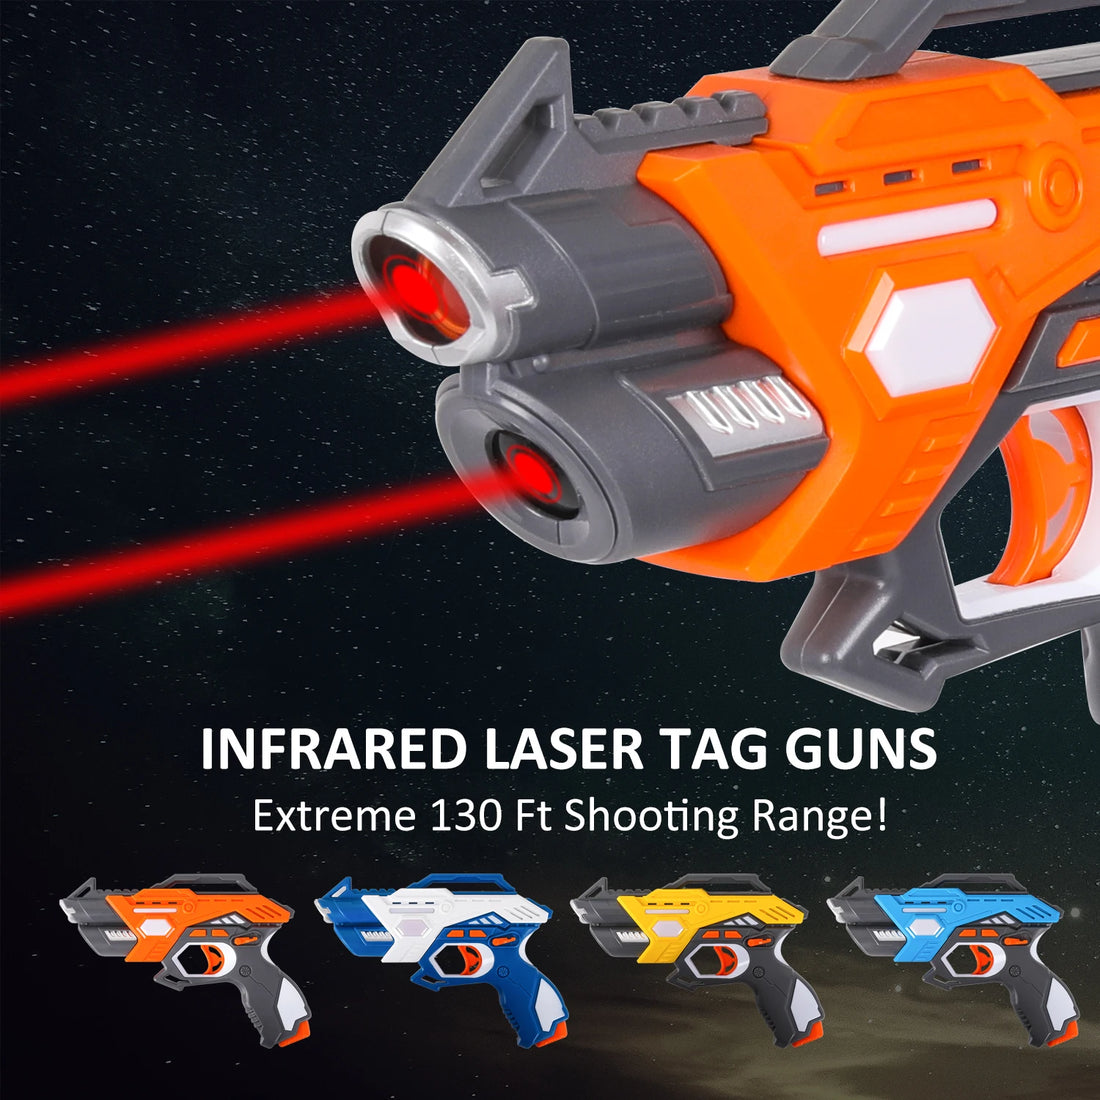 Laser Tag Guns Vests Set of 4 Battle Game Electric Infrared Toy Guns Weapon Kids Laser Gun Pistol for Boys Indoor Outdoor Sports